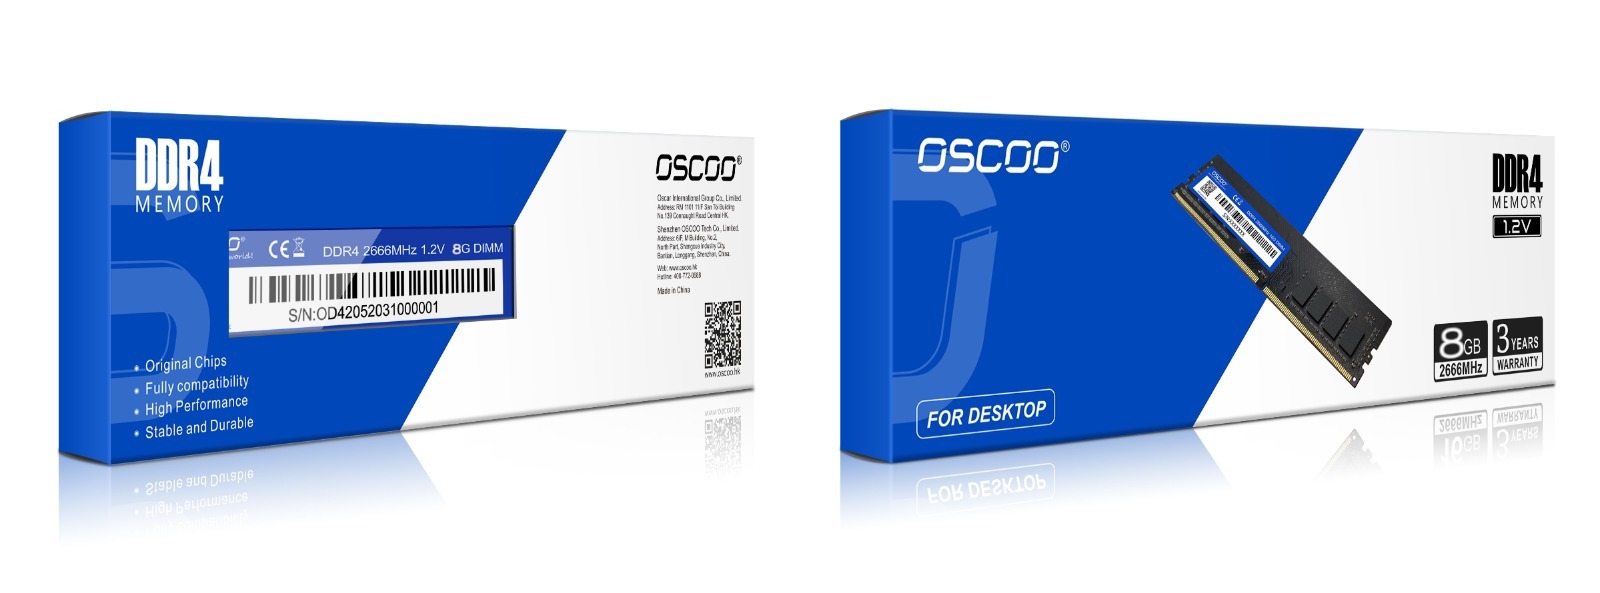 Oscoo DDR4 desktop 16GB 3200MHz Heatsink